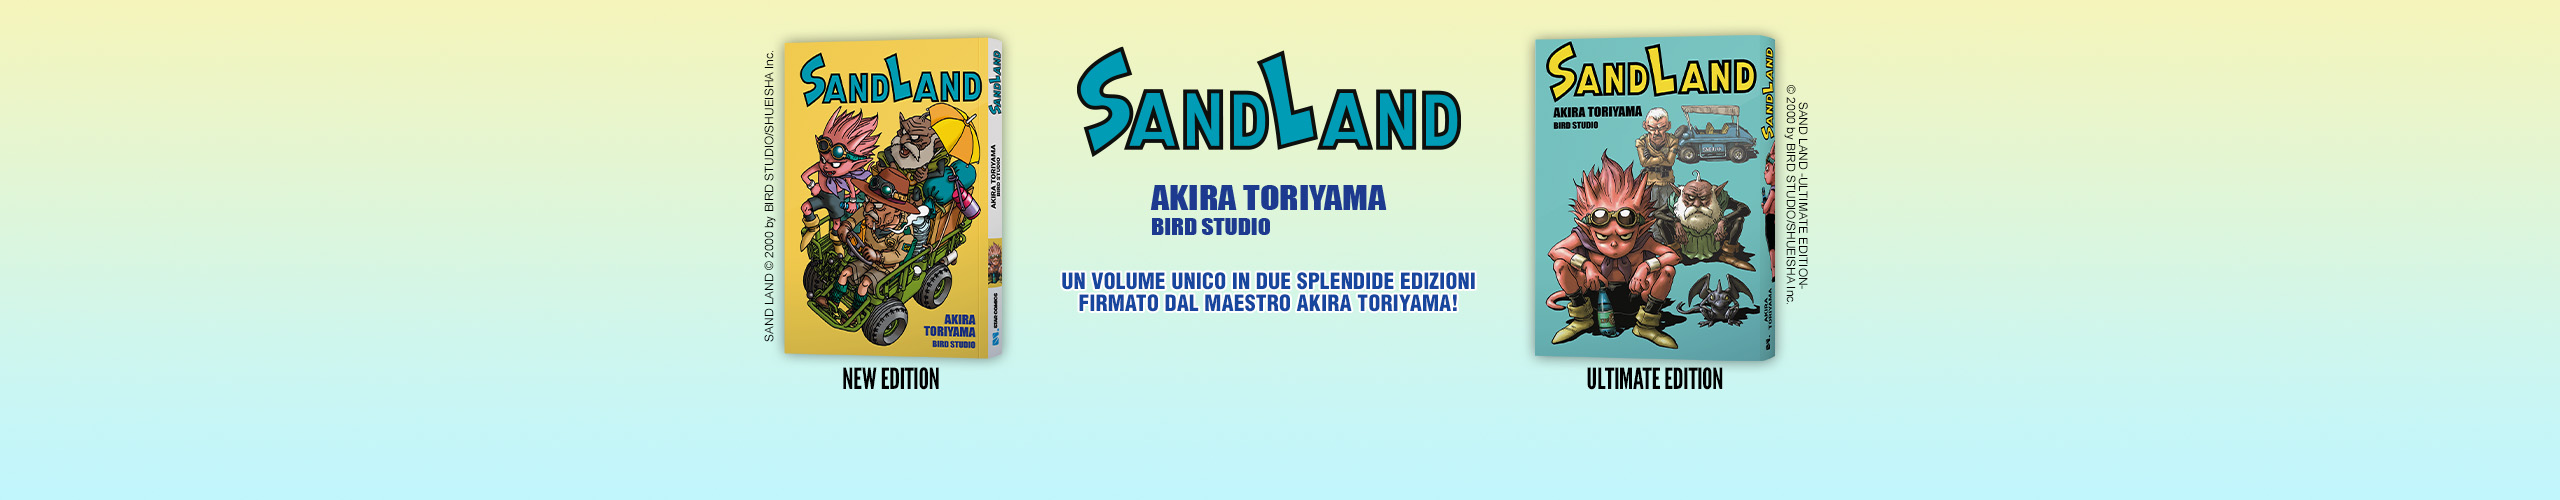 Cs SandLand-News-home.jpg